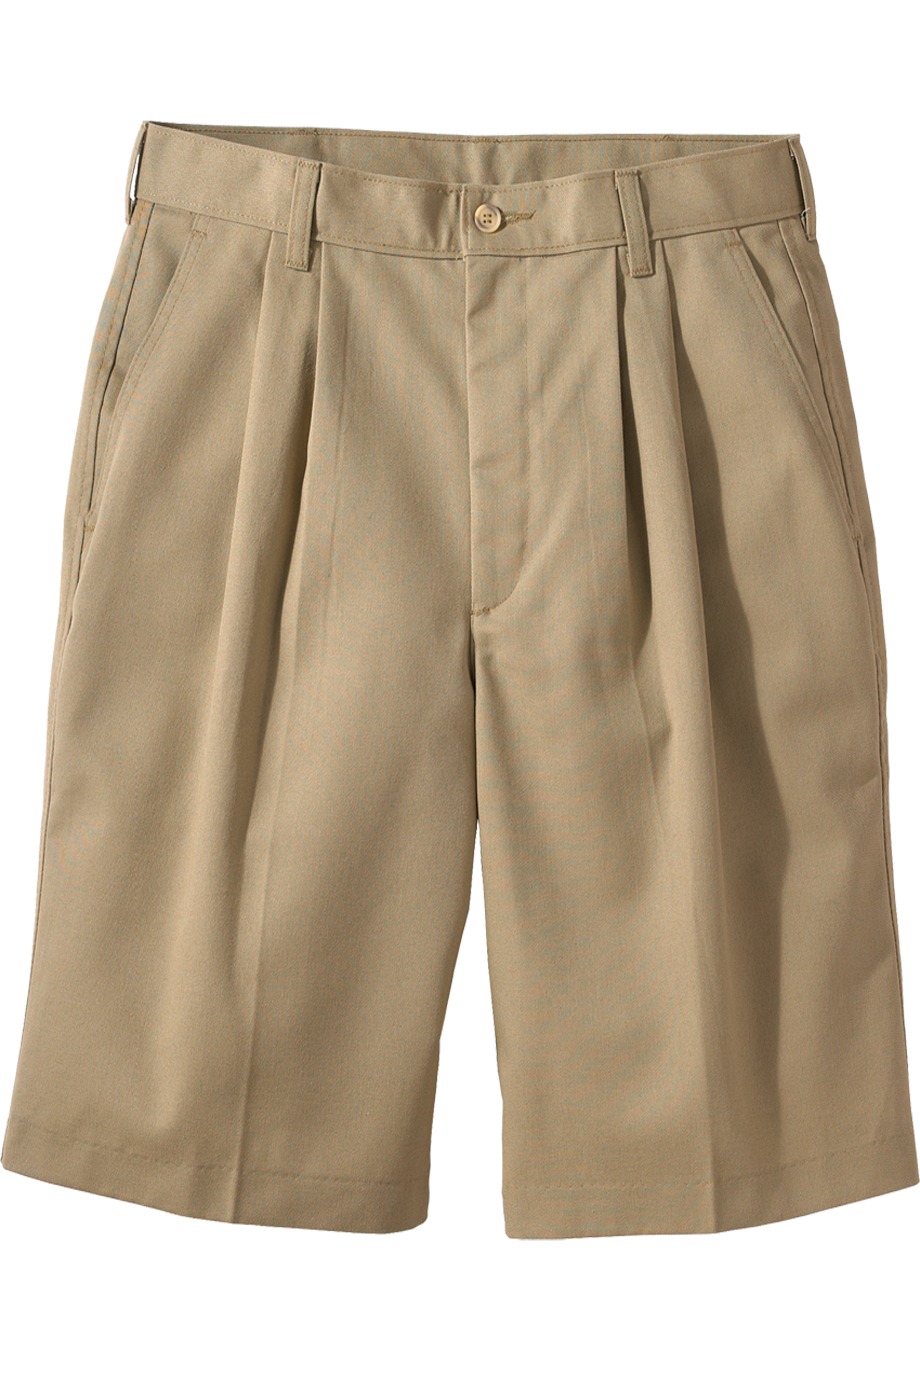 Edwards Garment 2480 - Men's Pleated Short